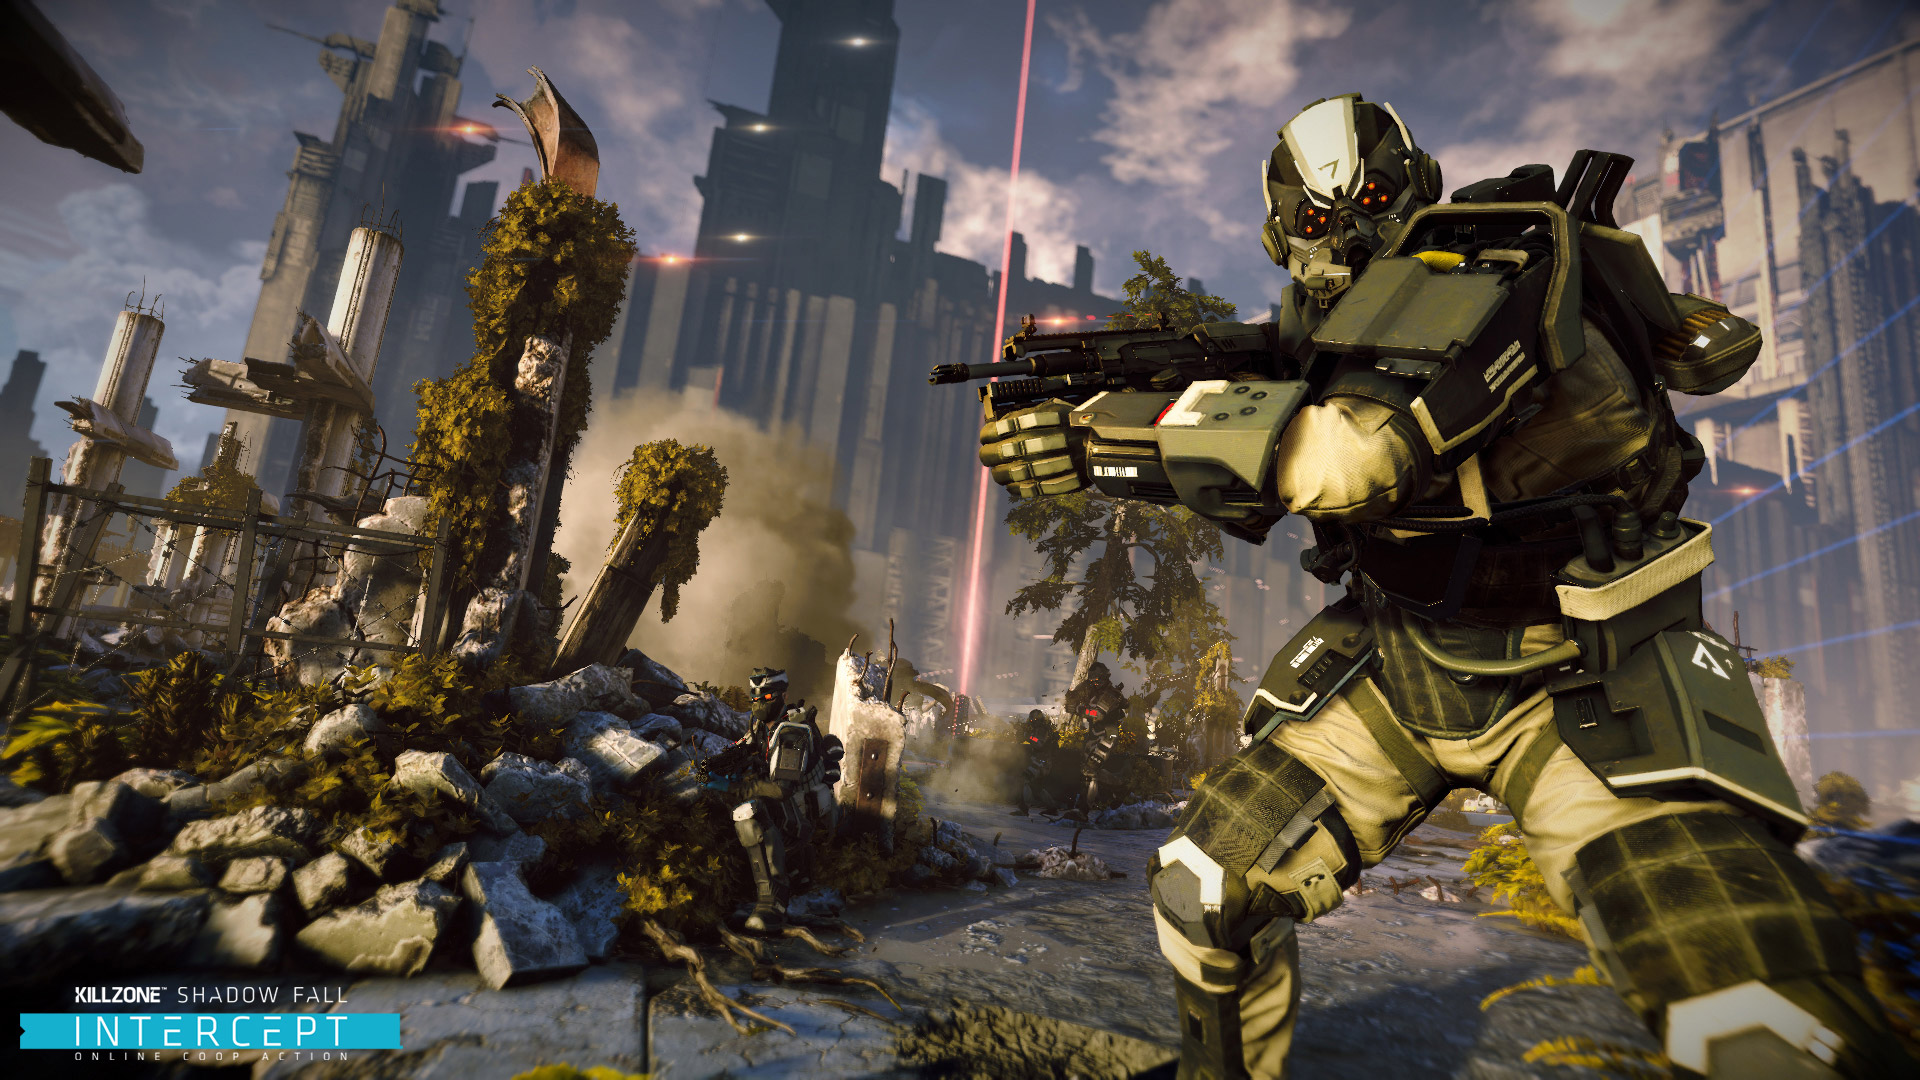 Killzone Shadow Fall Intercept screenshot with a character wearing heavy armor